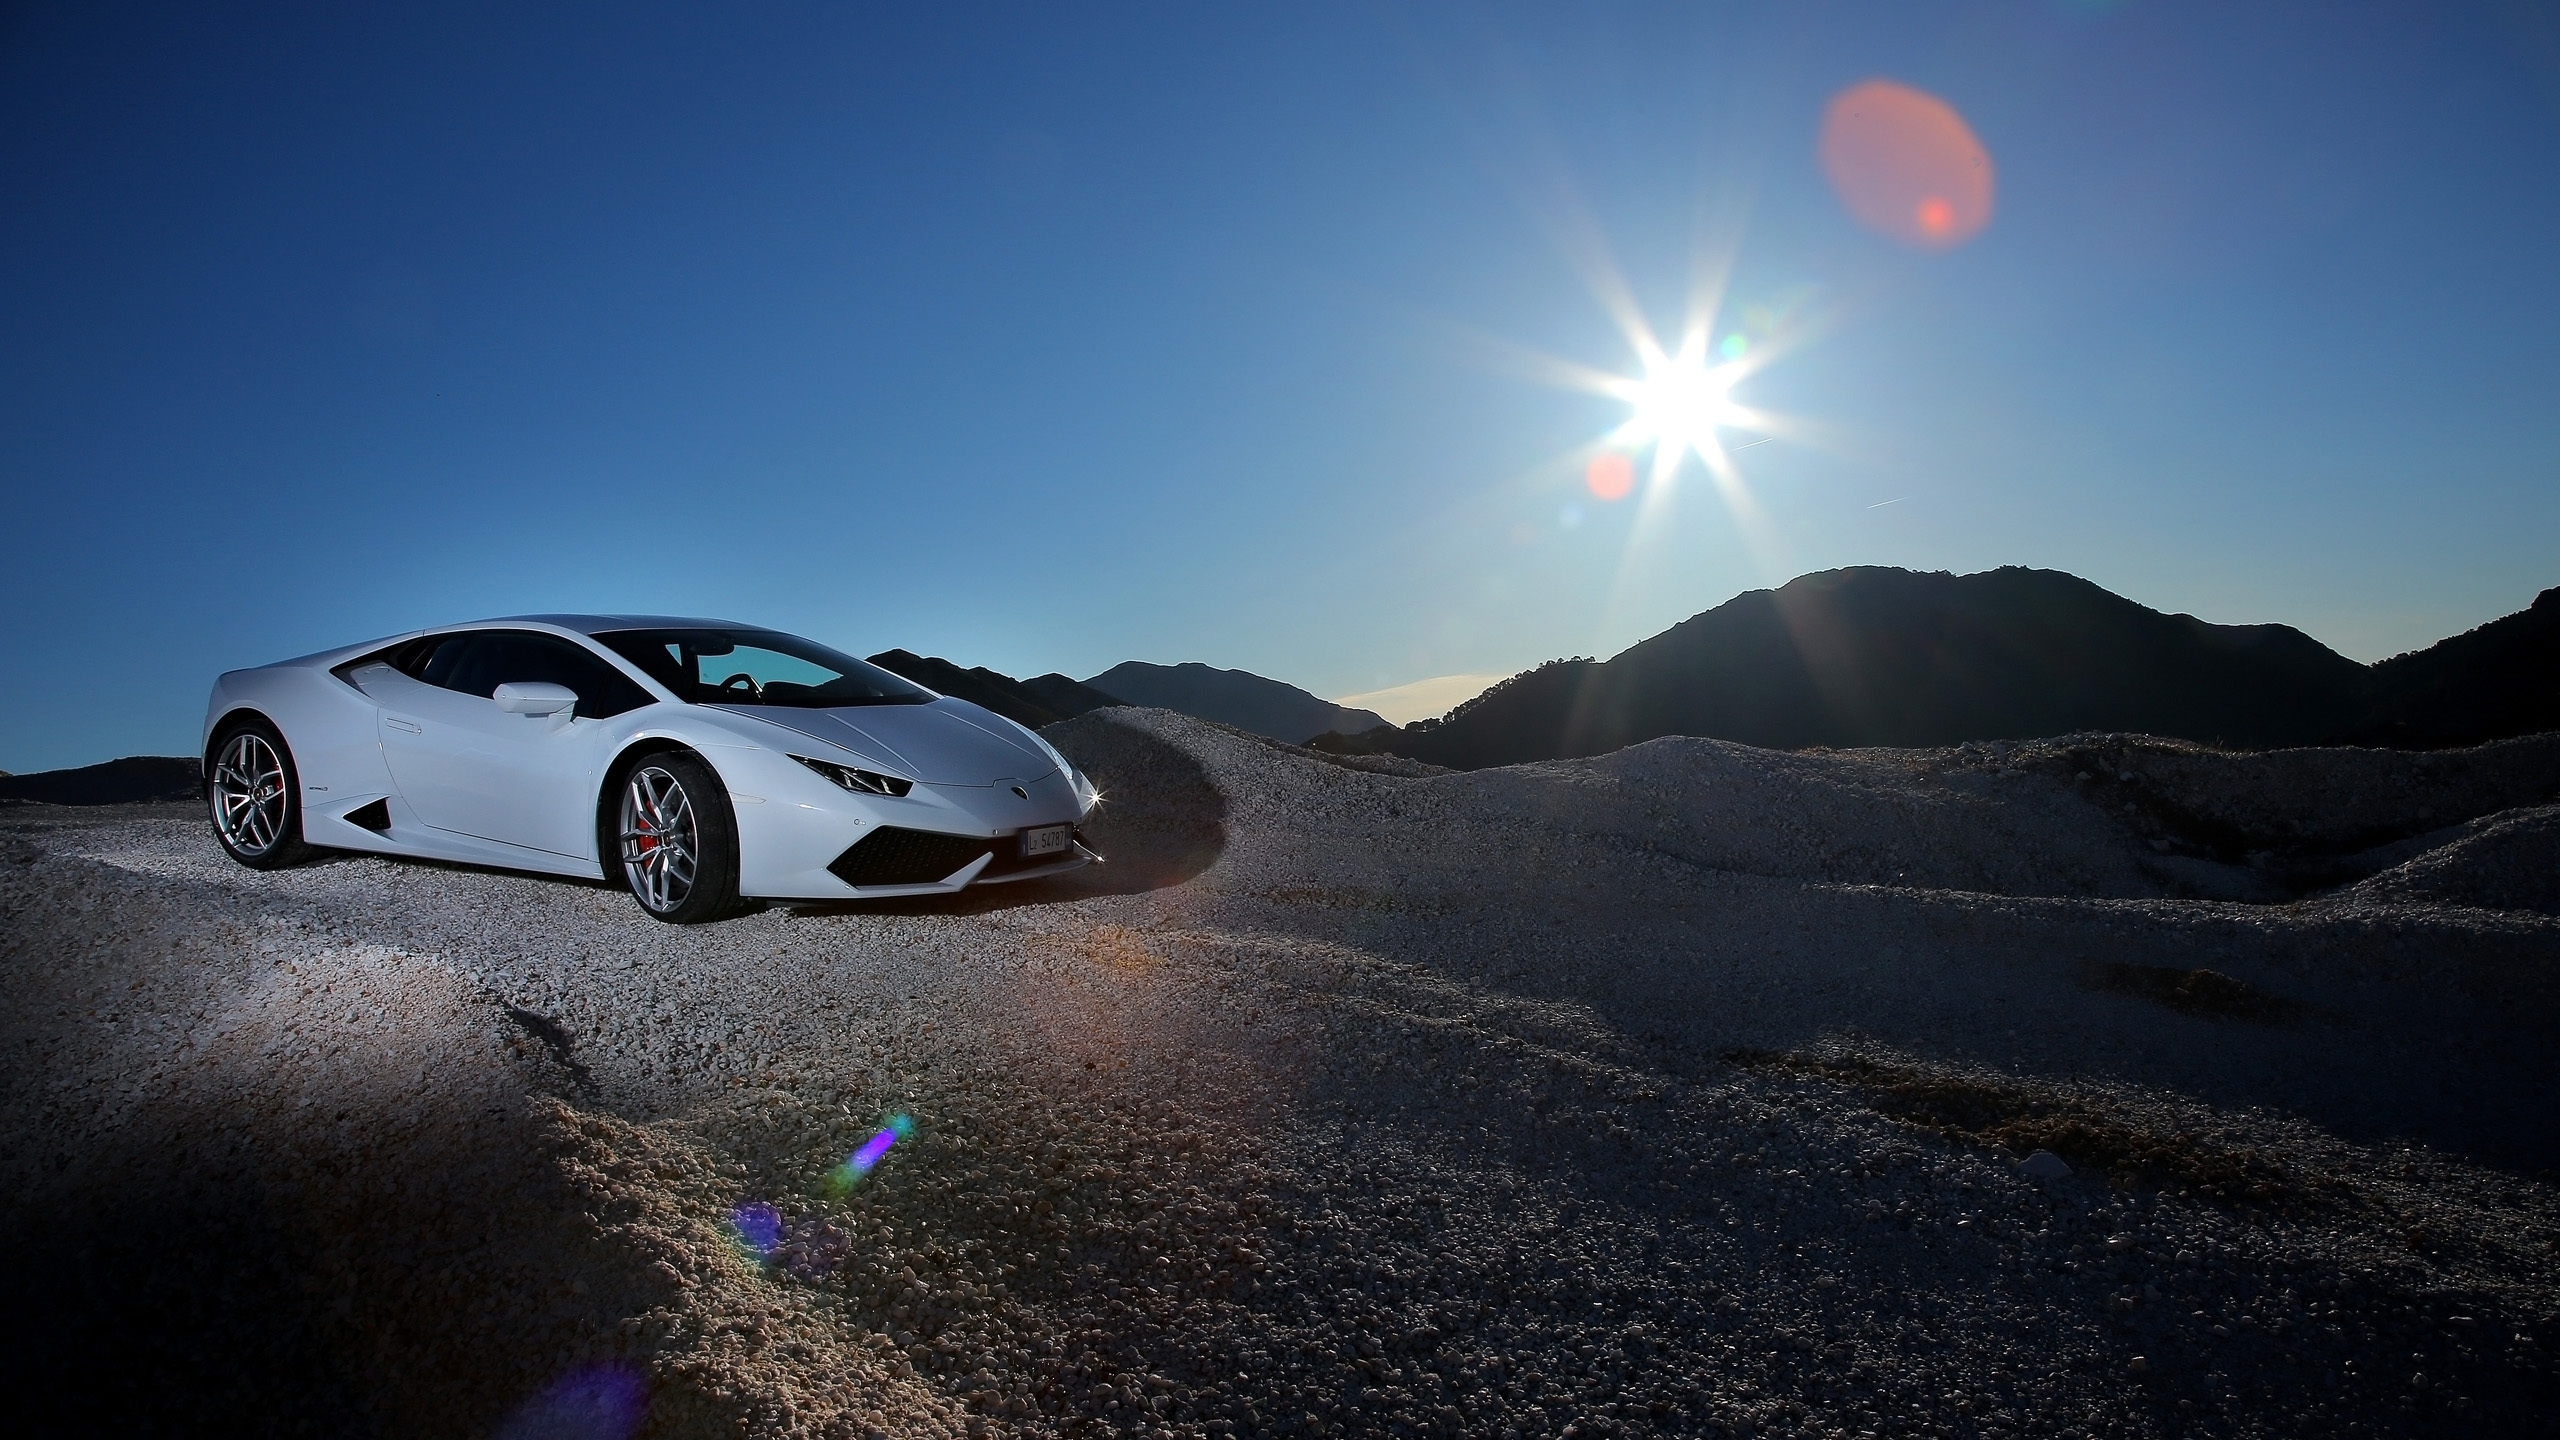 Lamborghini Huracan Sunset for 2560x1440 HDTV resolution